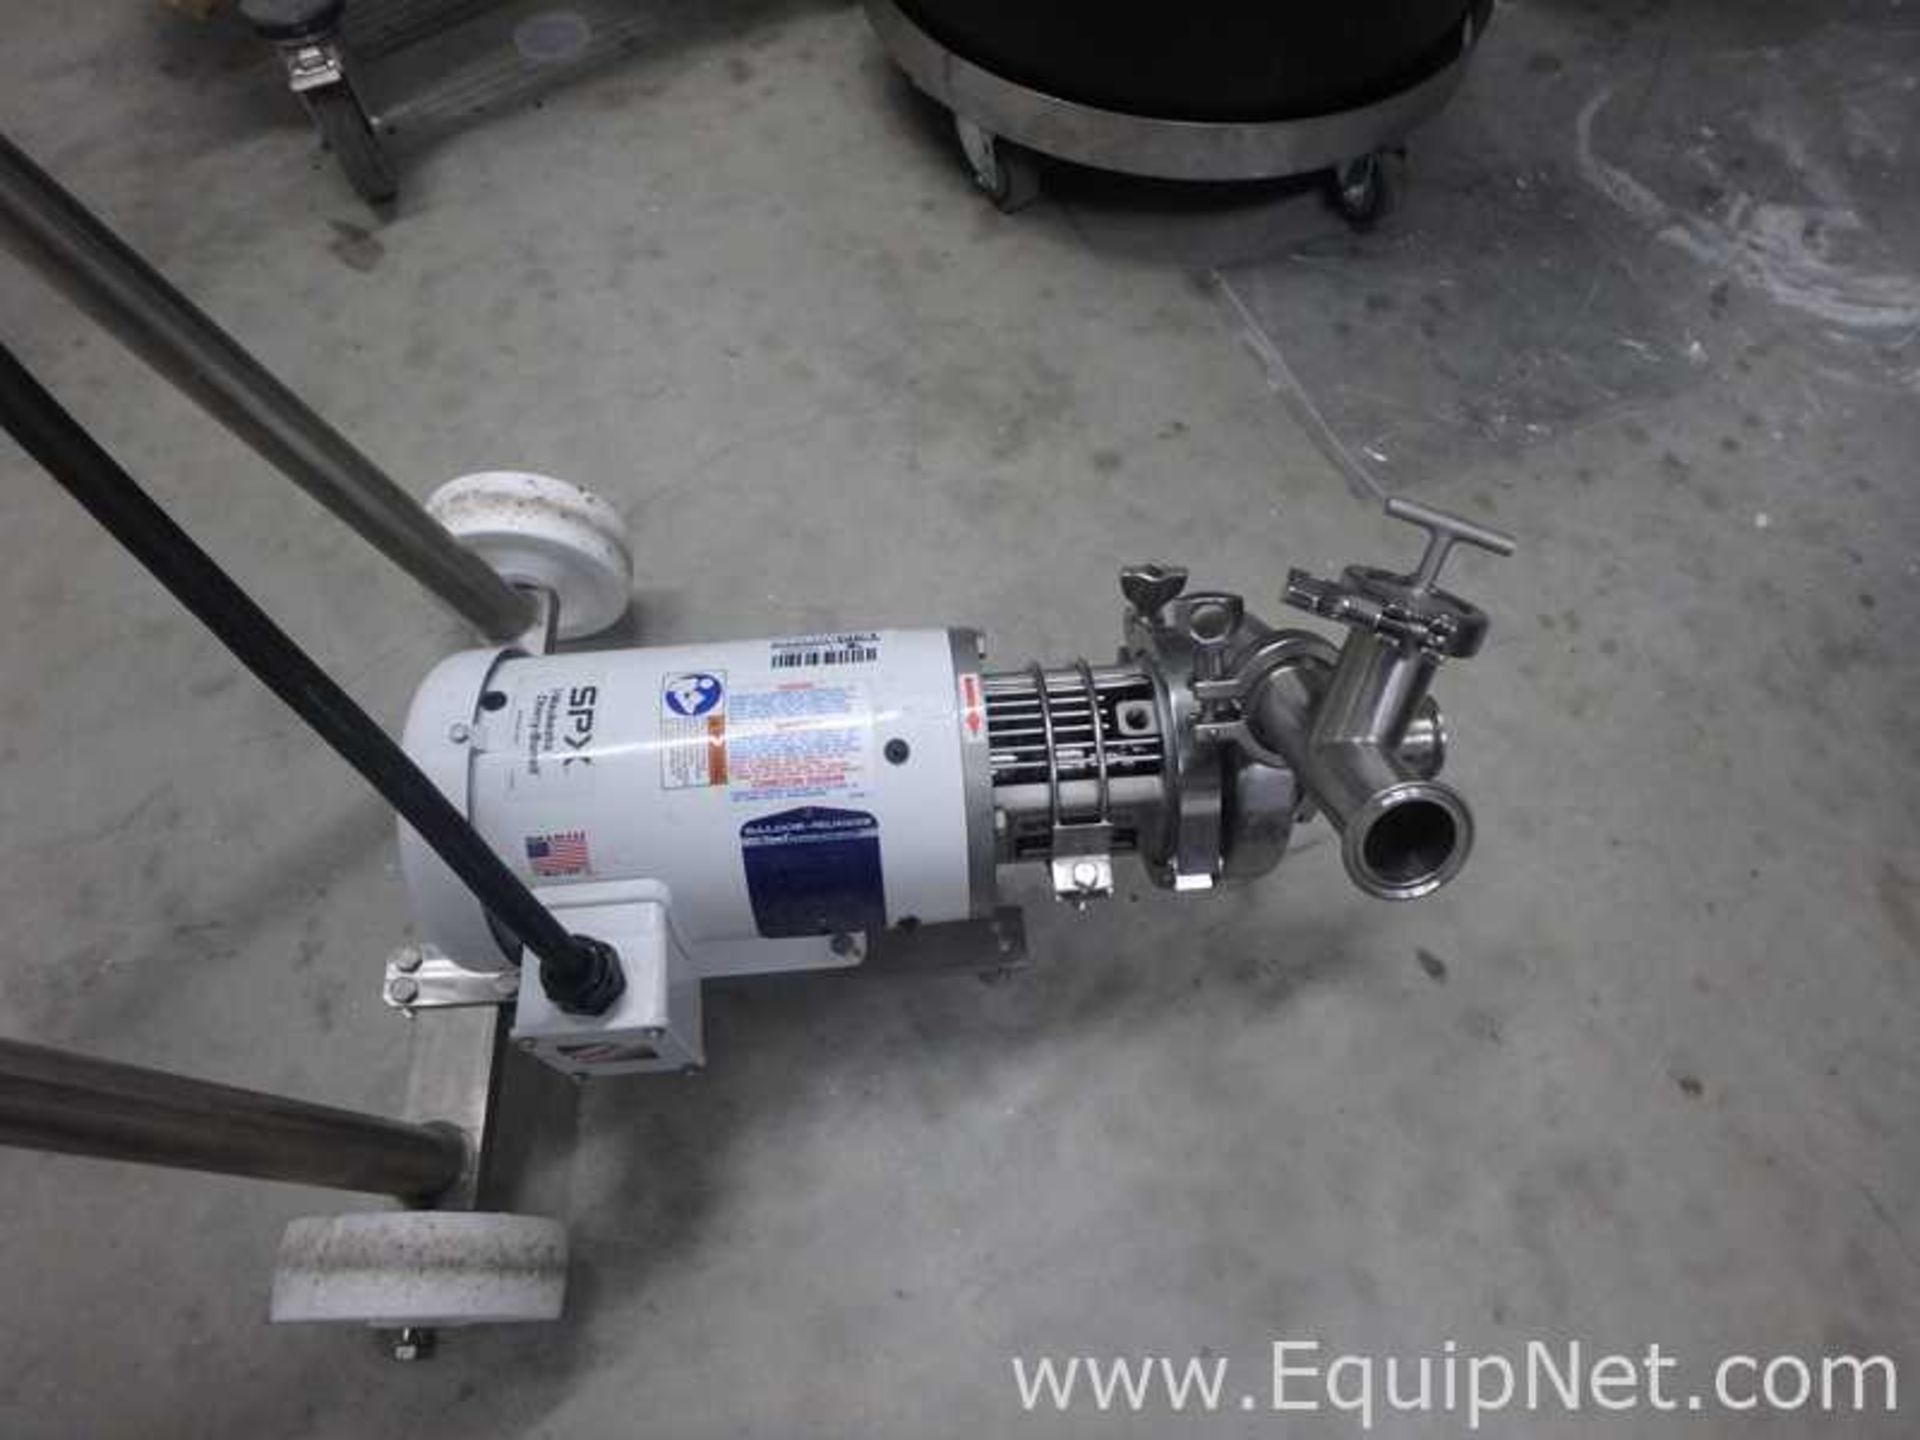 SPX - Waukesha Centrifugal Pump on Wheels - Image 3 of 12